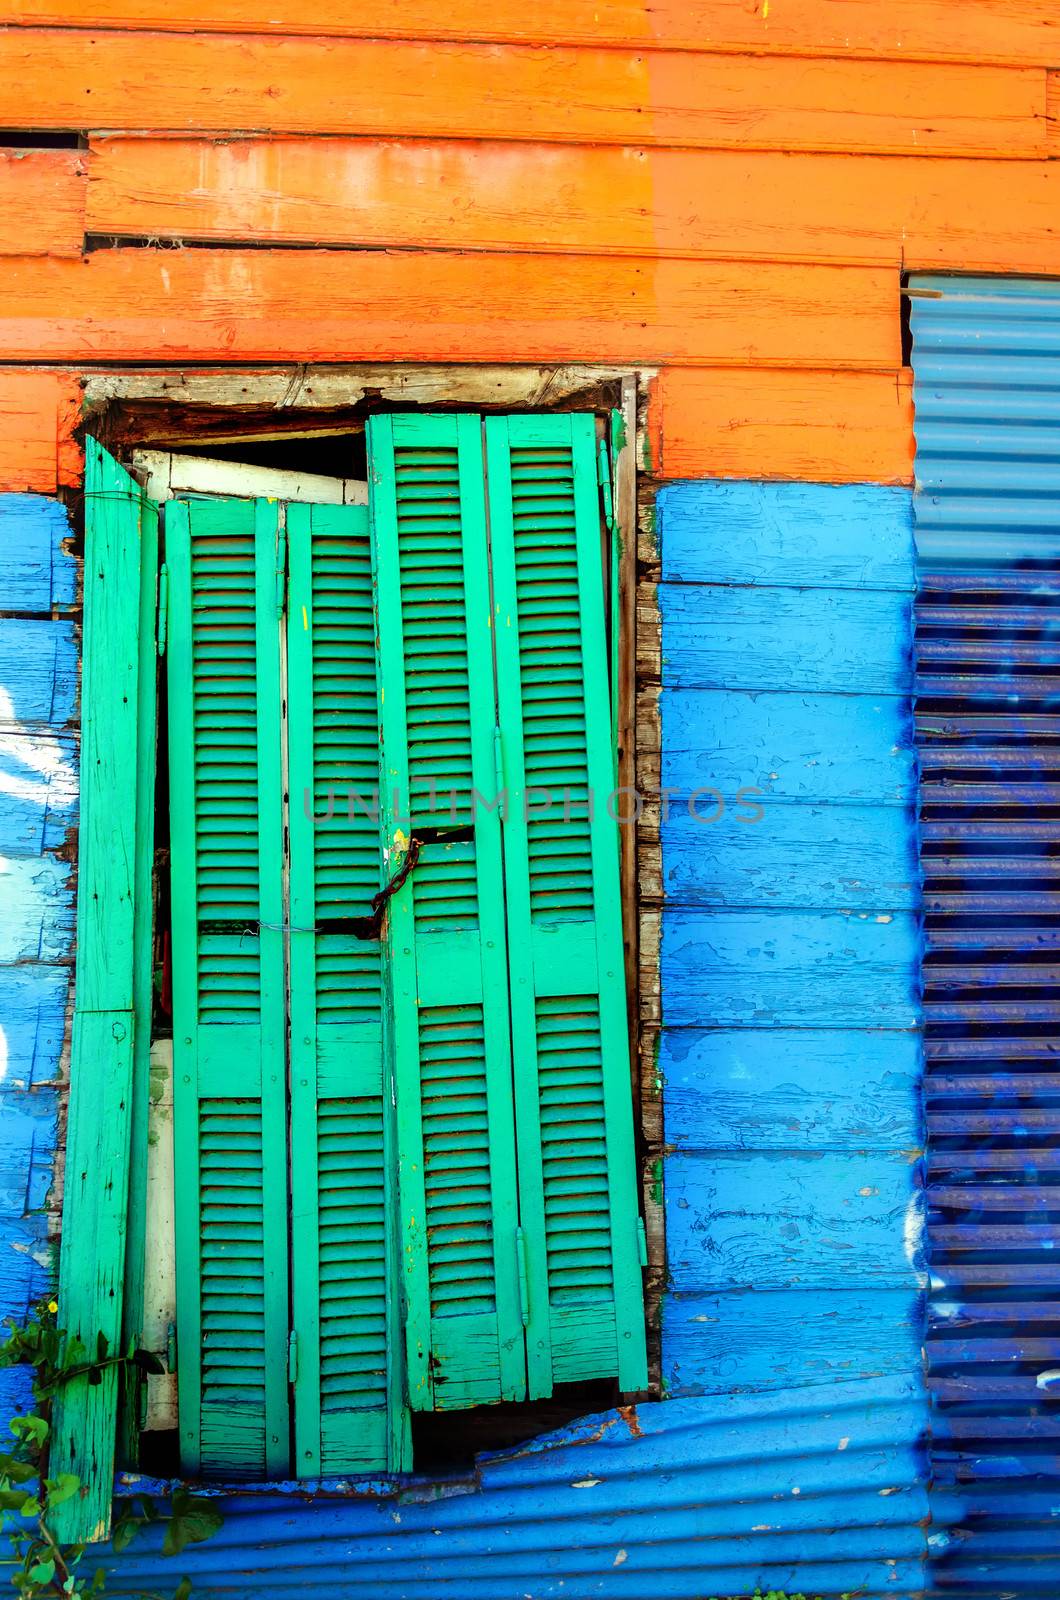 Colorful Slum by jkraft5